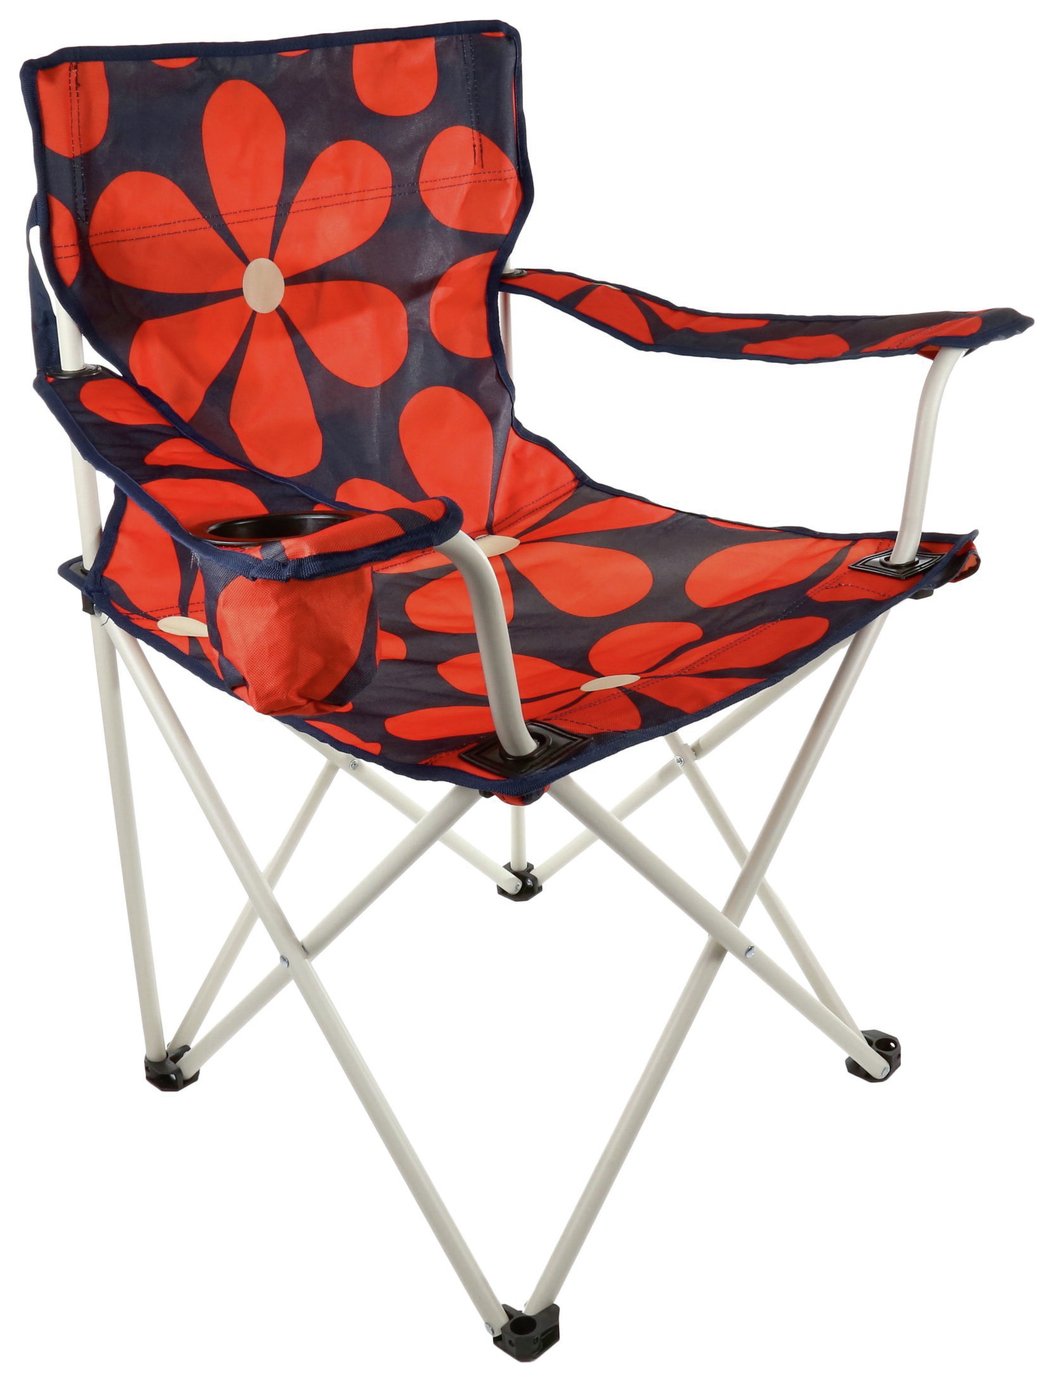 Regatta Orla Kiely Steel Camping Chair 